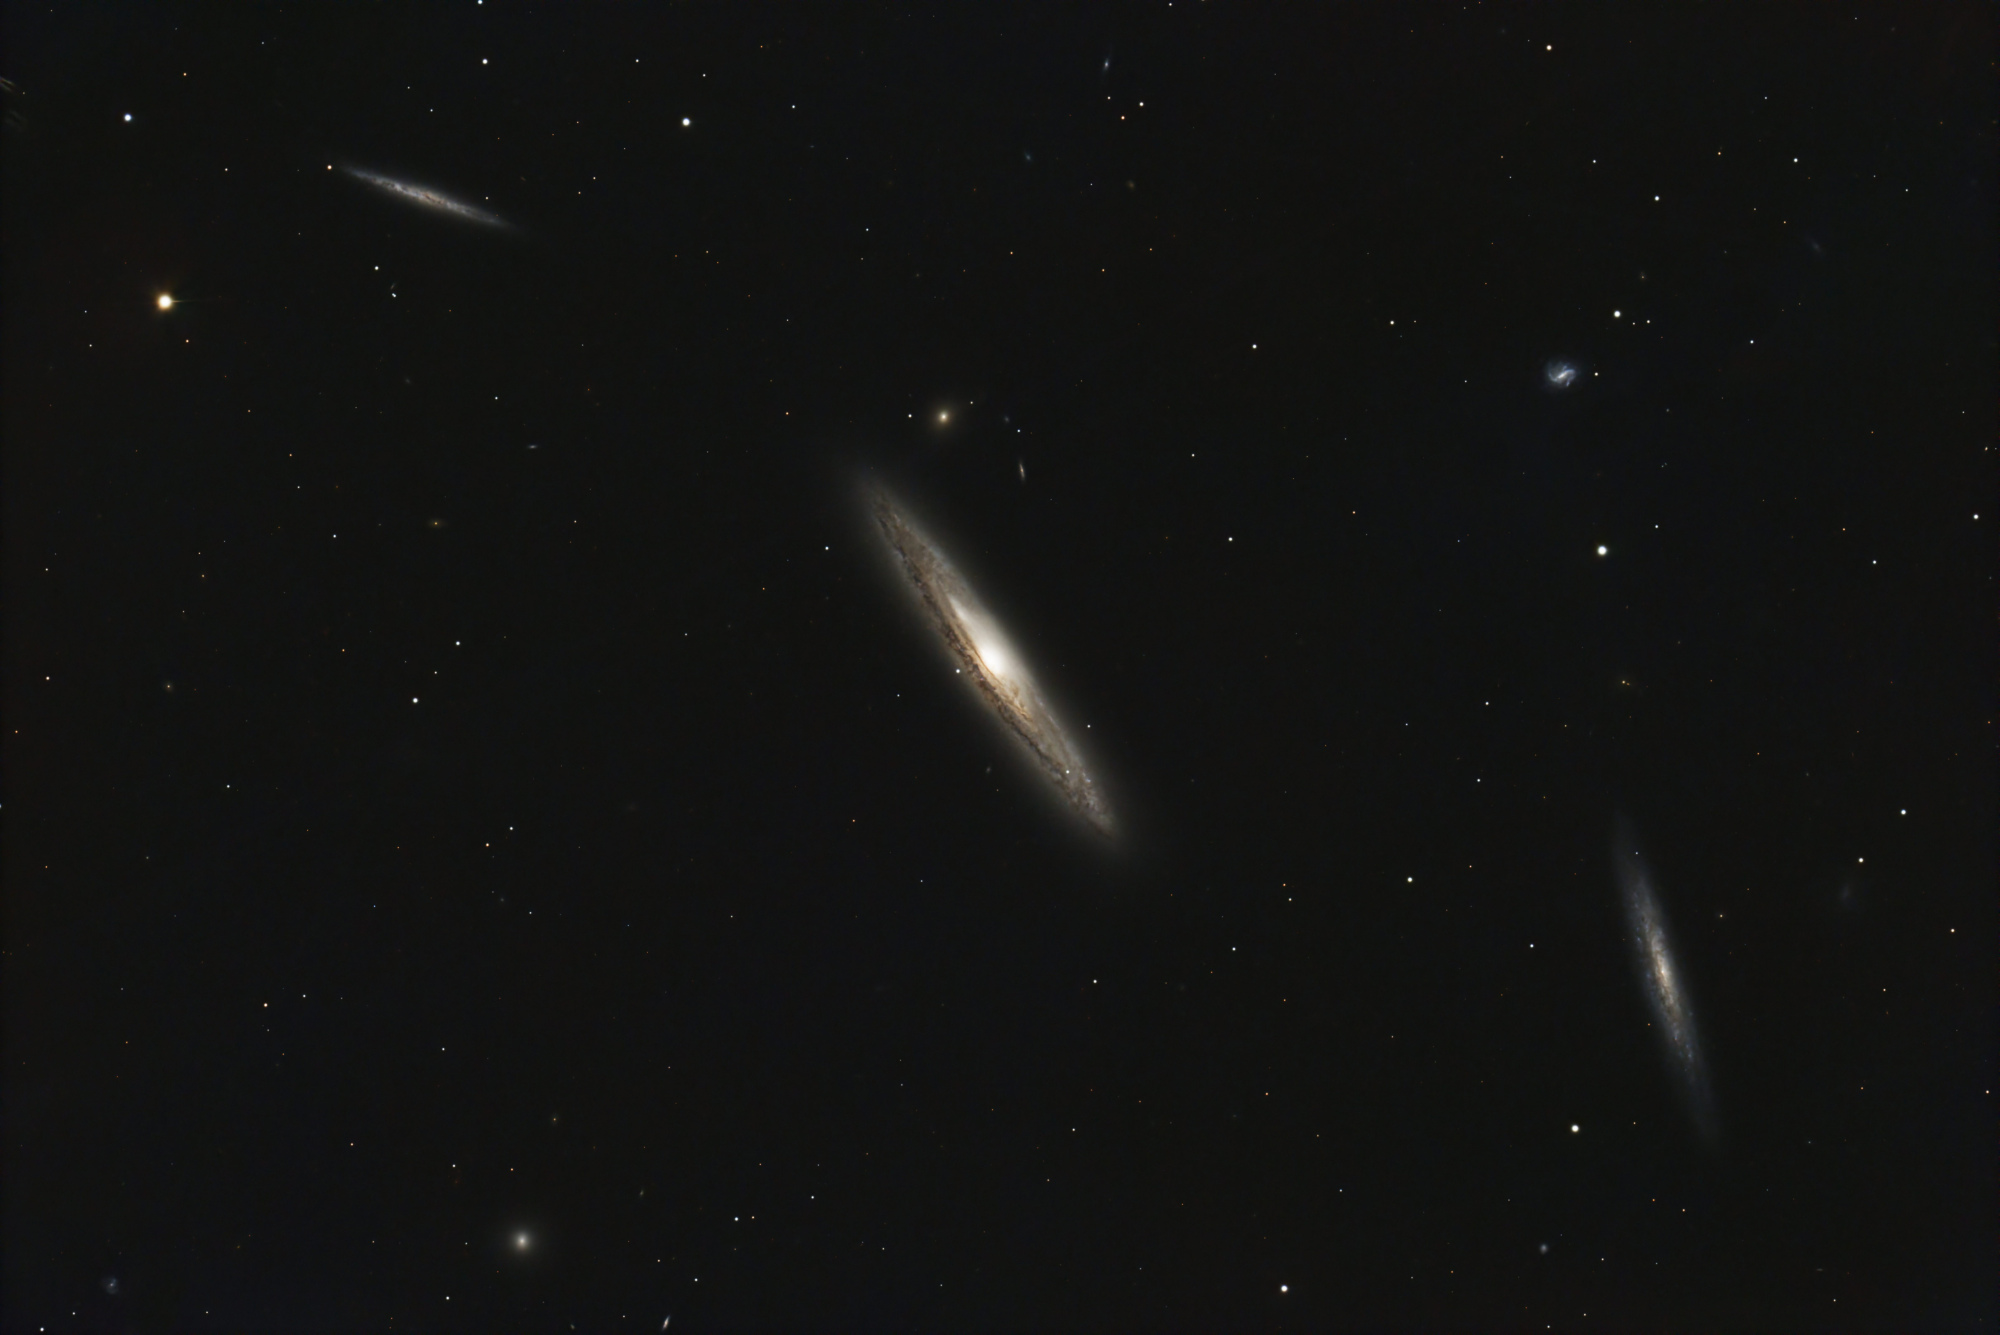 NGC4216.jpg